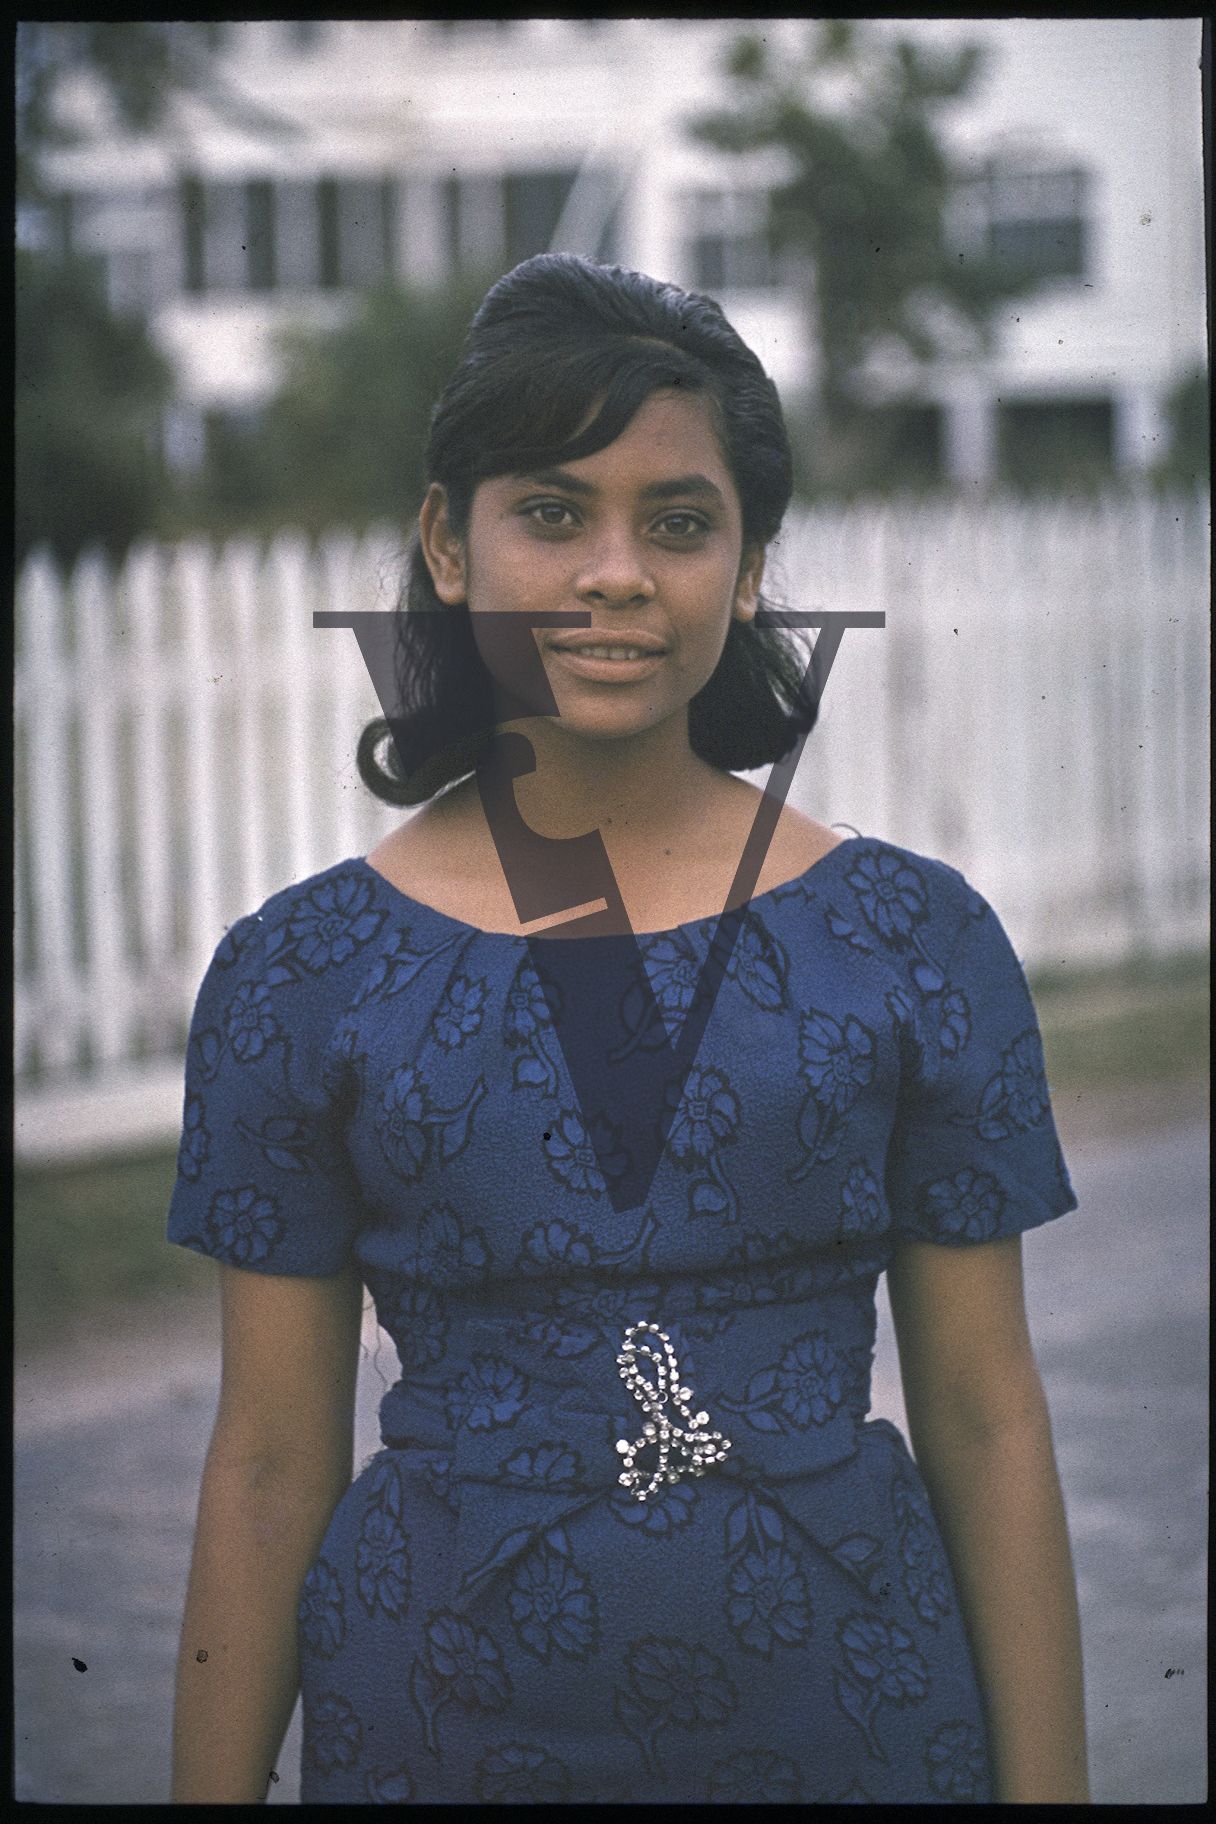 Belize, Woman stands in portrait.